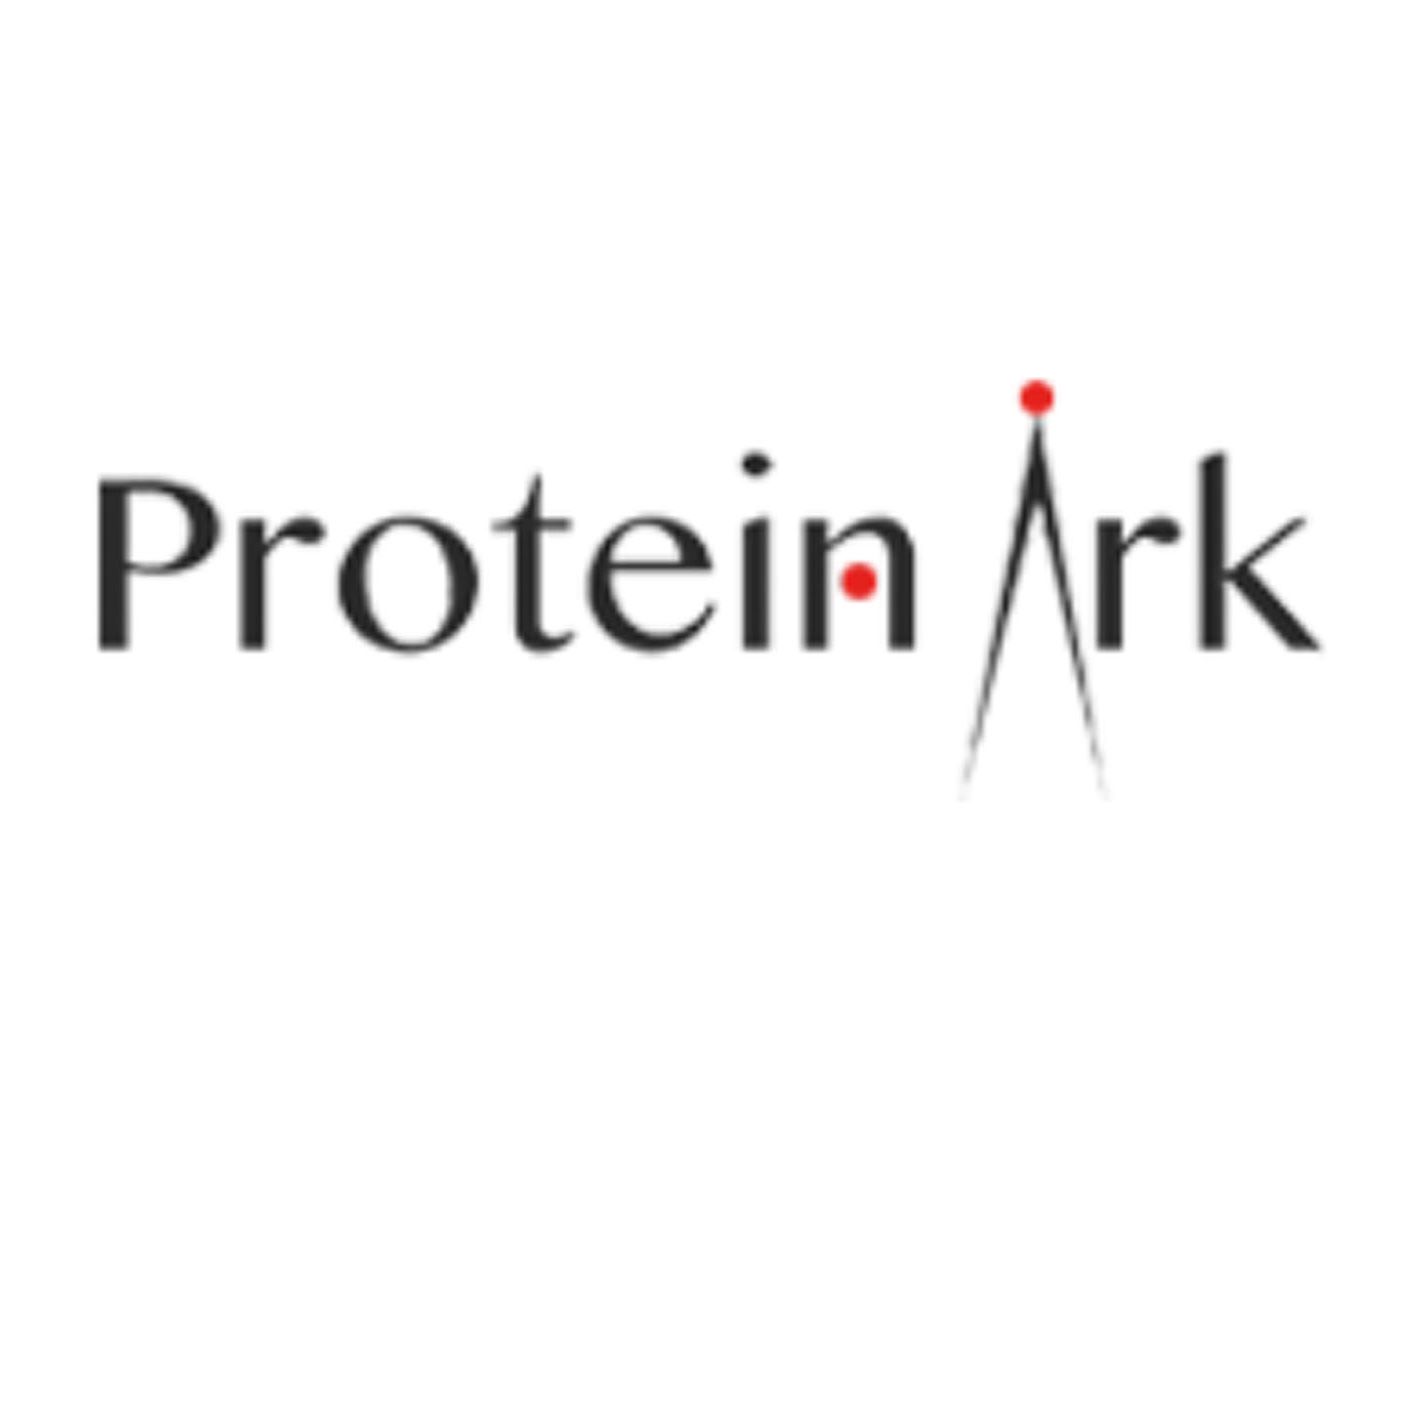 Protein Ark  提供全面的蛋白质相关耗材与试剂